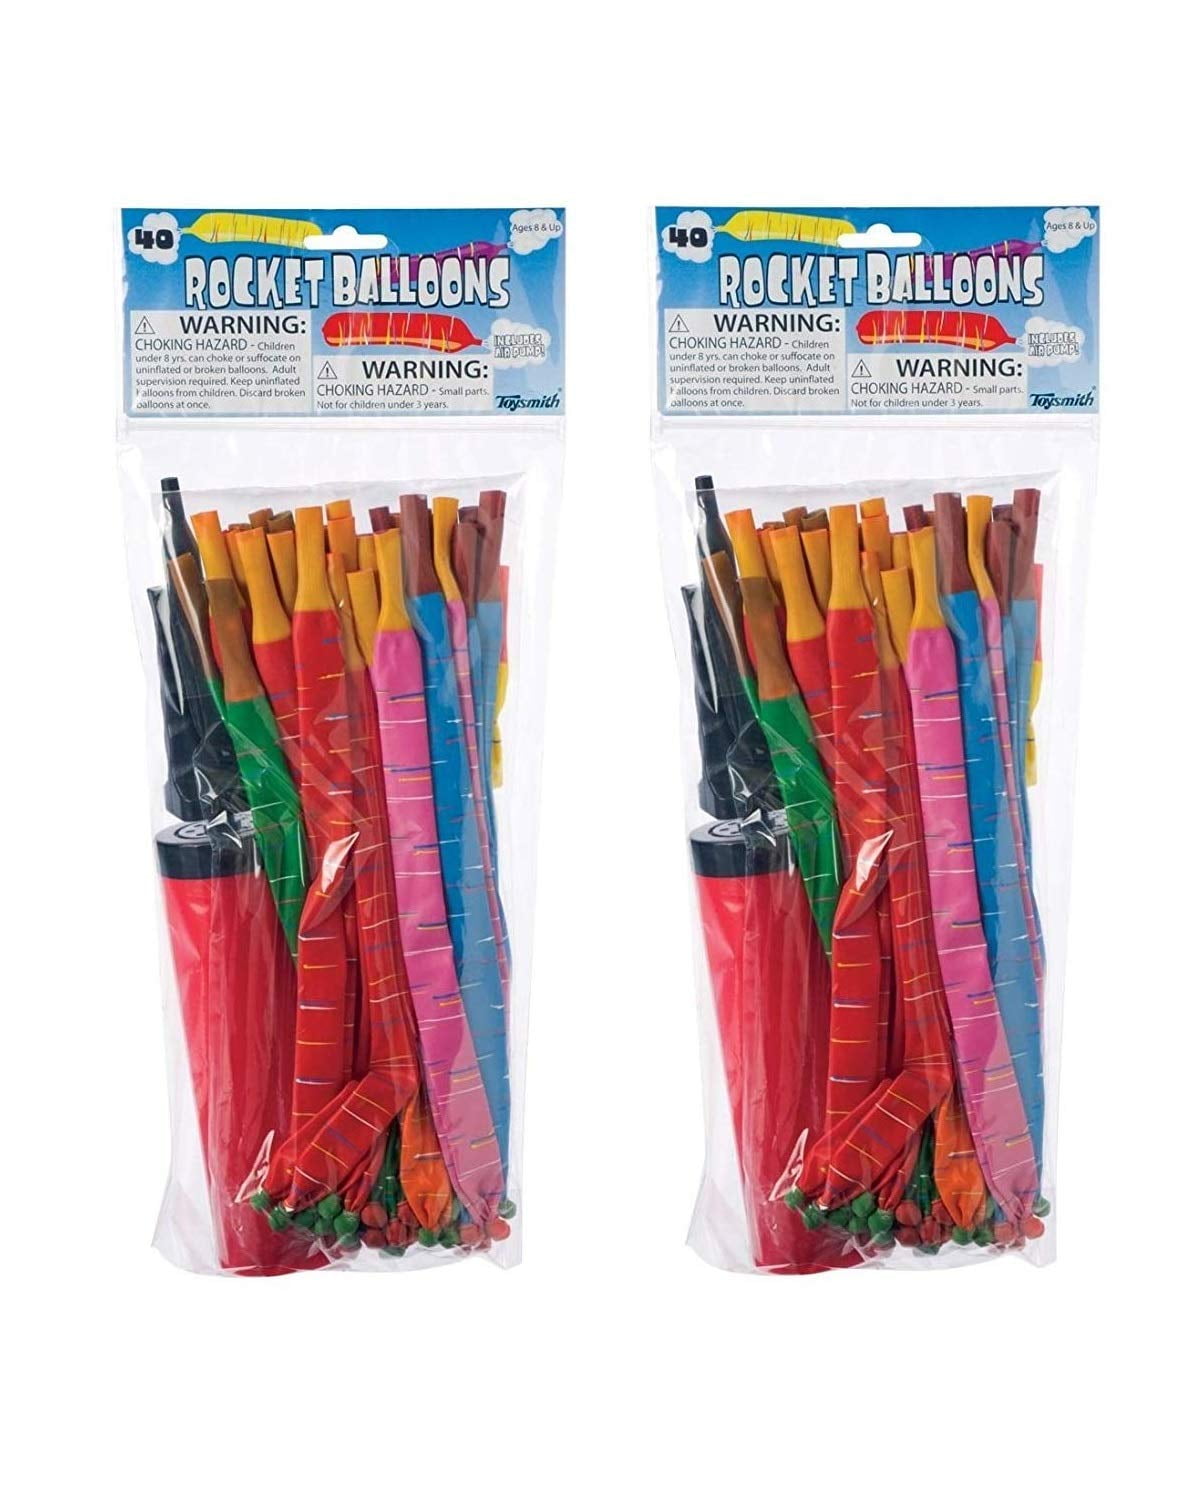 Colors May Vary 20 Rocket Balloons with Pump, ,Various Packaging. 